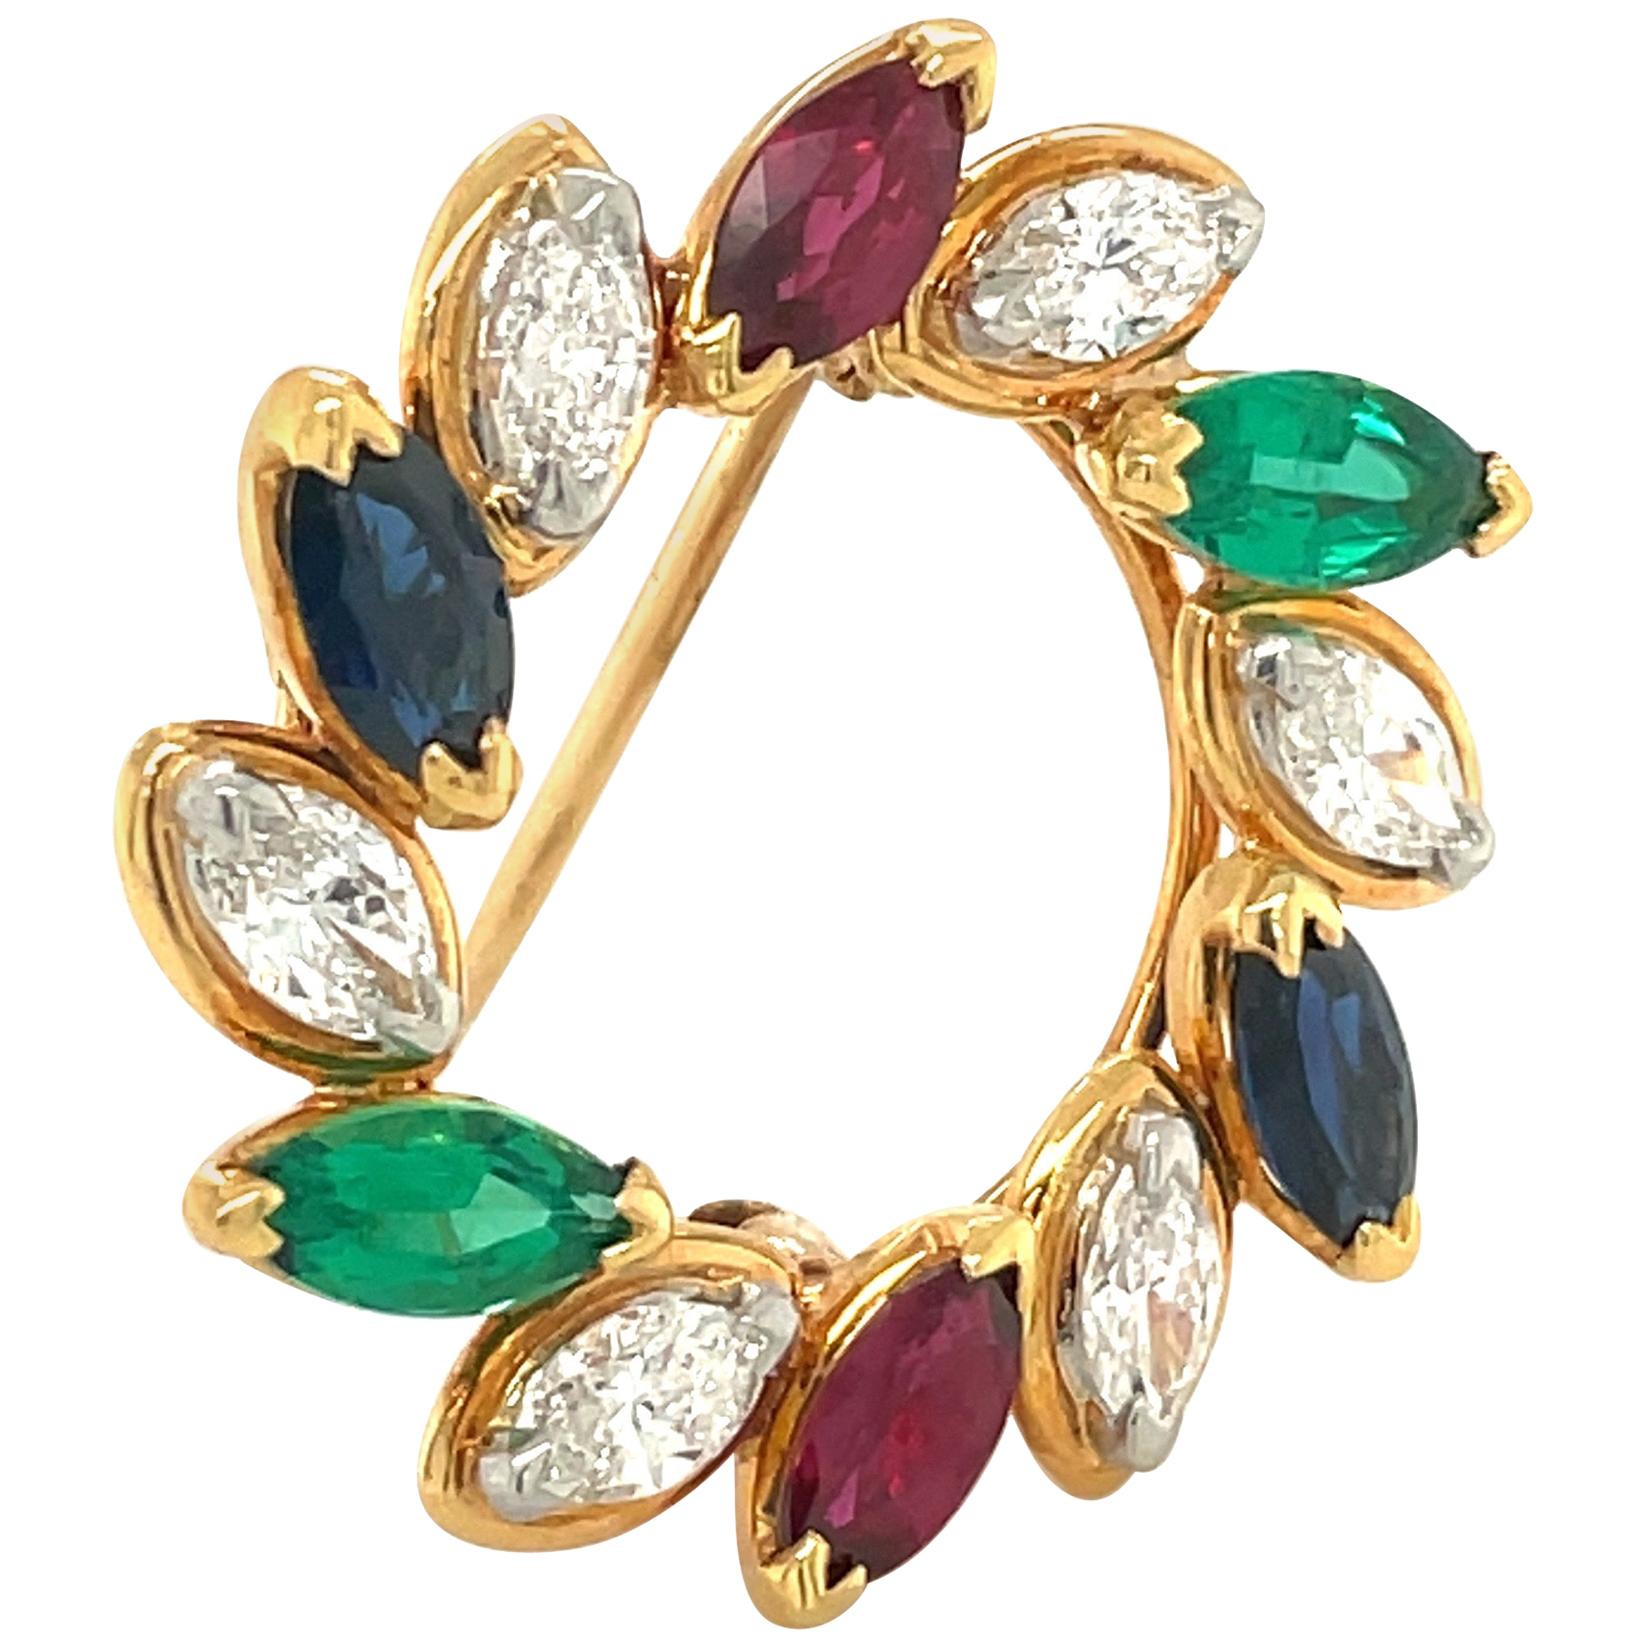 Oscar Heyman Broche couronne en or 18 carats avec diamants marquis et pierres précieuses en vente